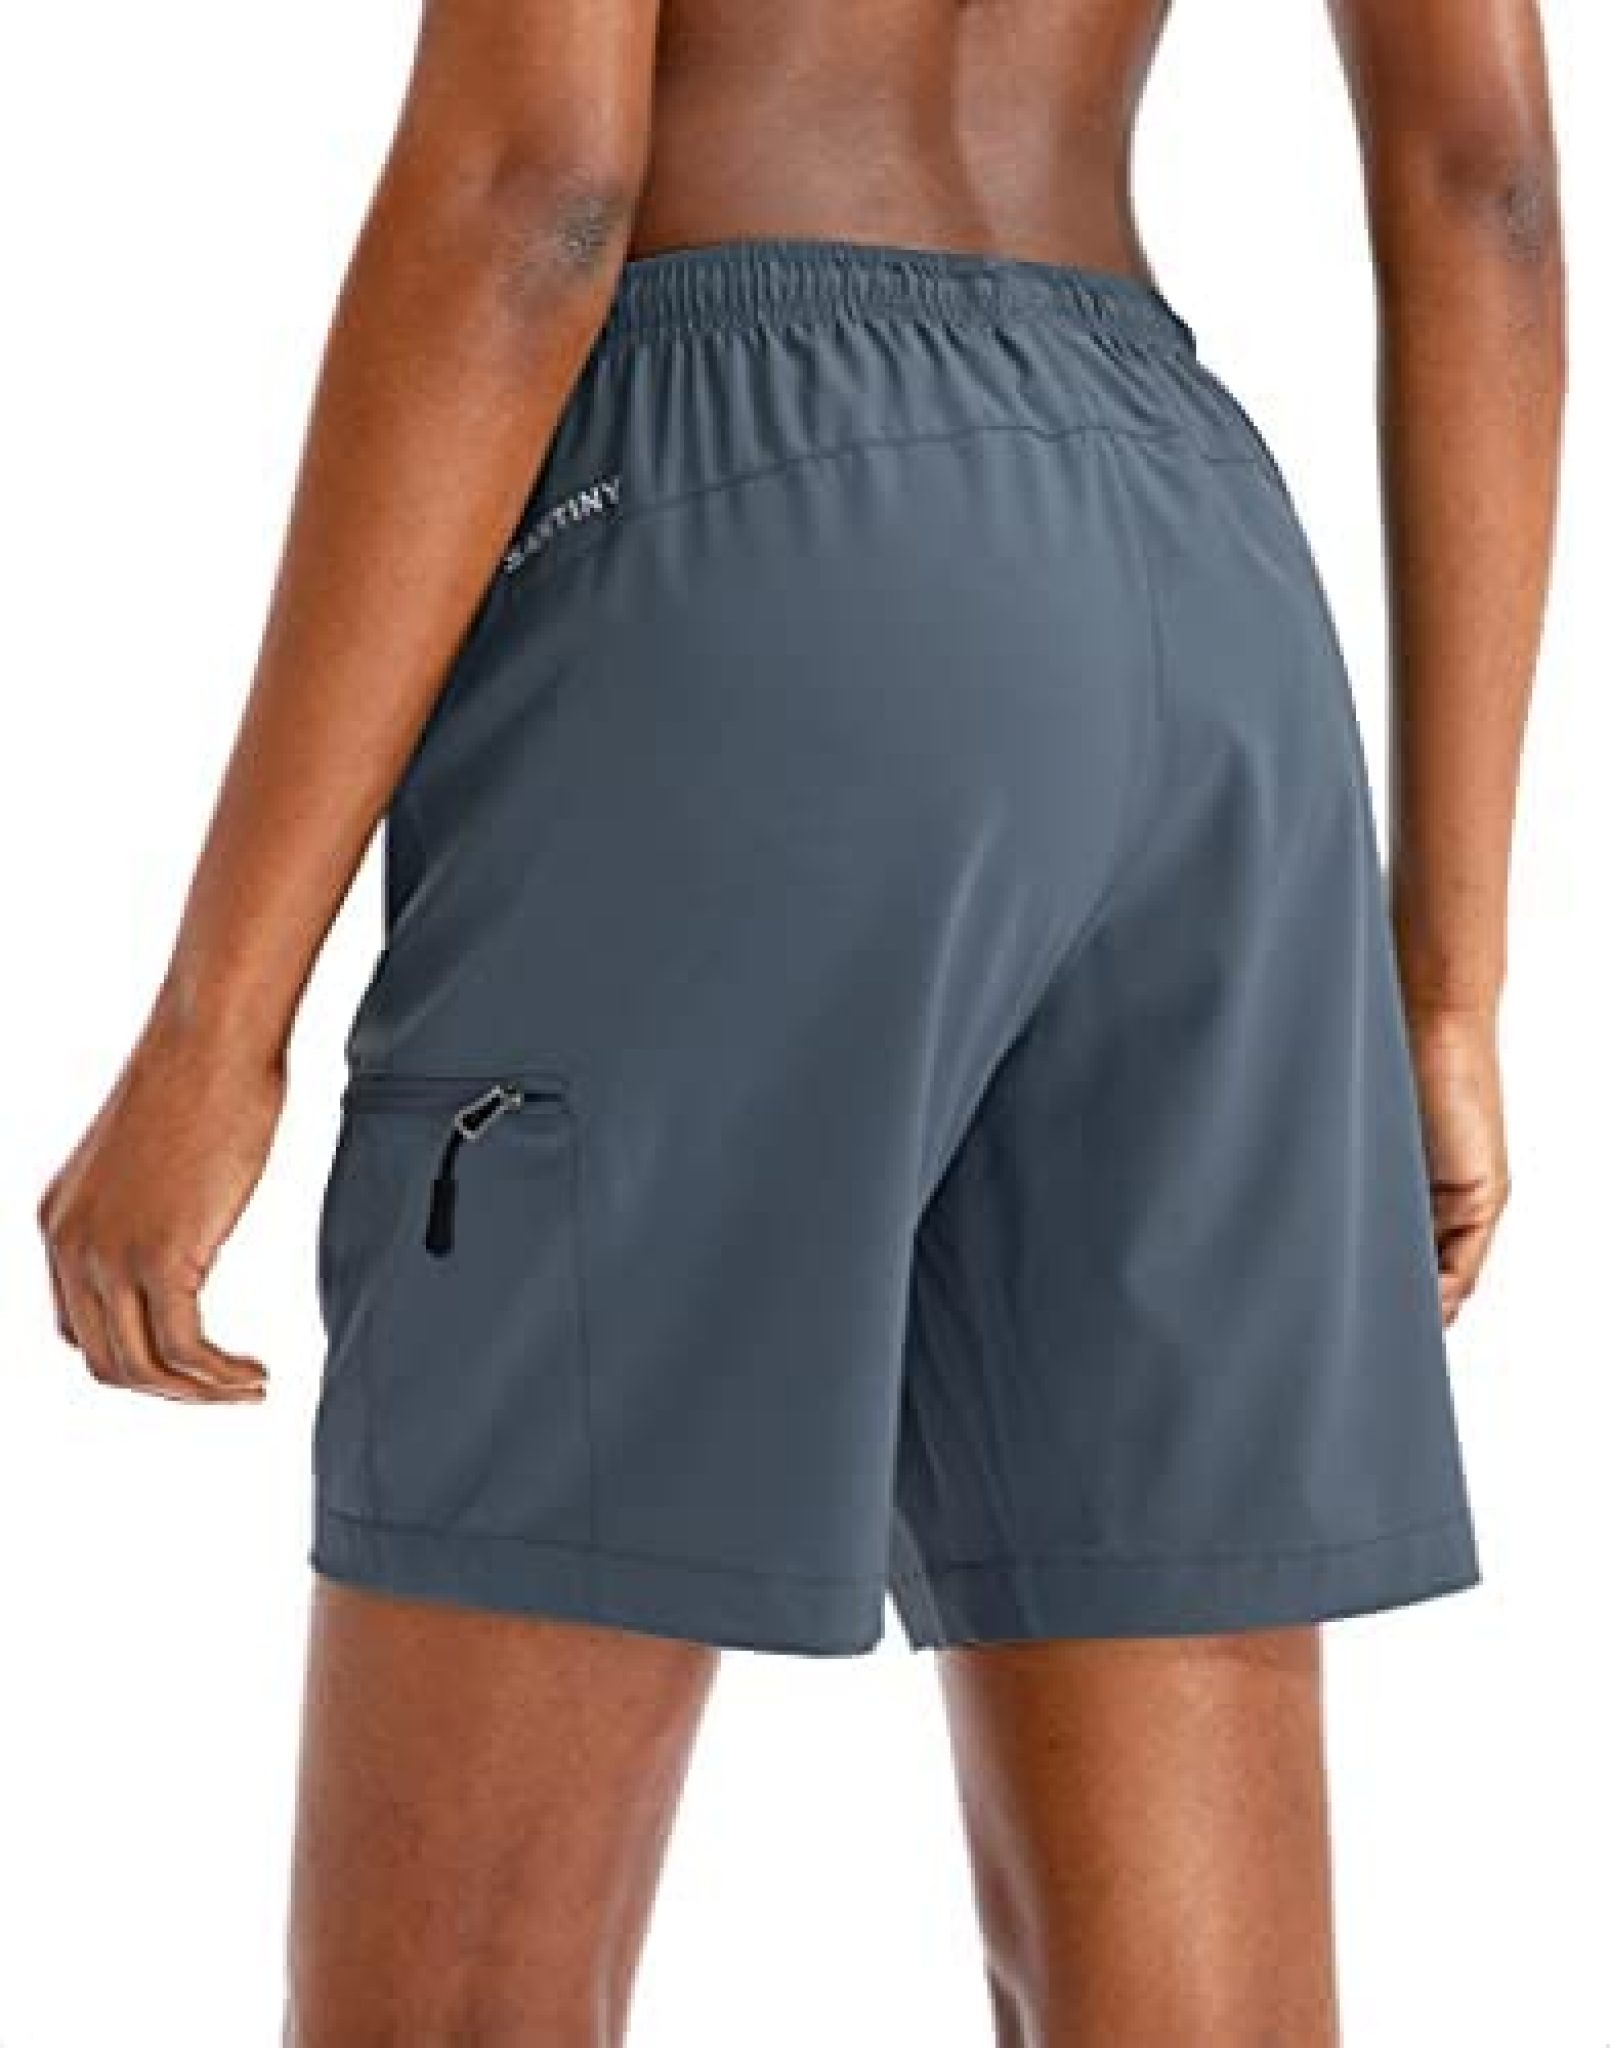 SANTINY Women's Hiking Cargo Shorts Quick Dry Lightweight Summer Shorts